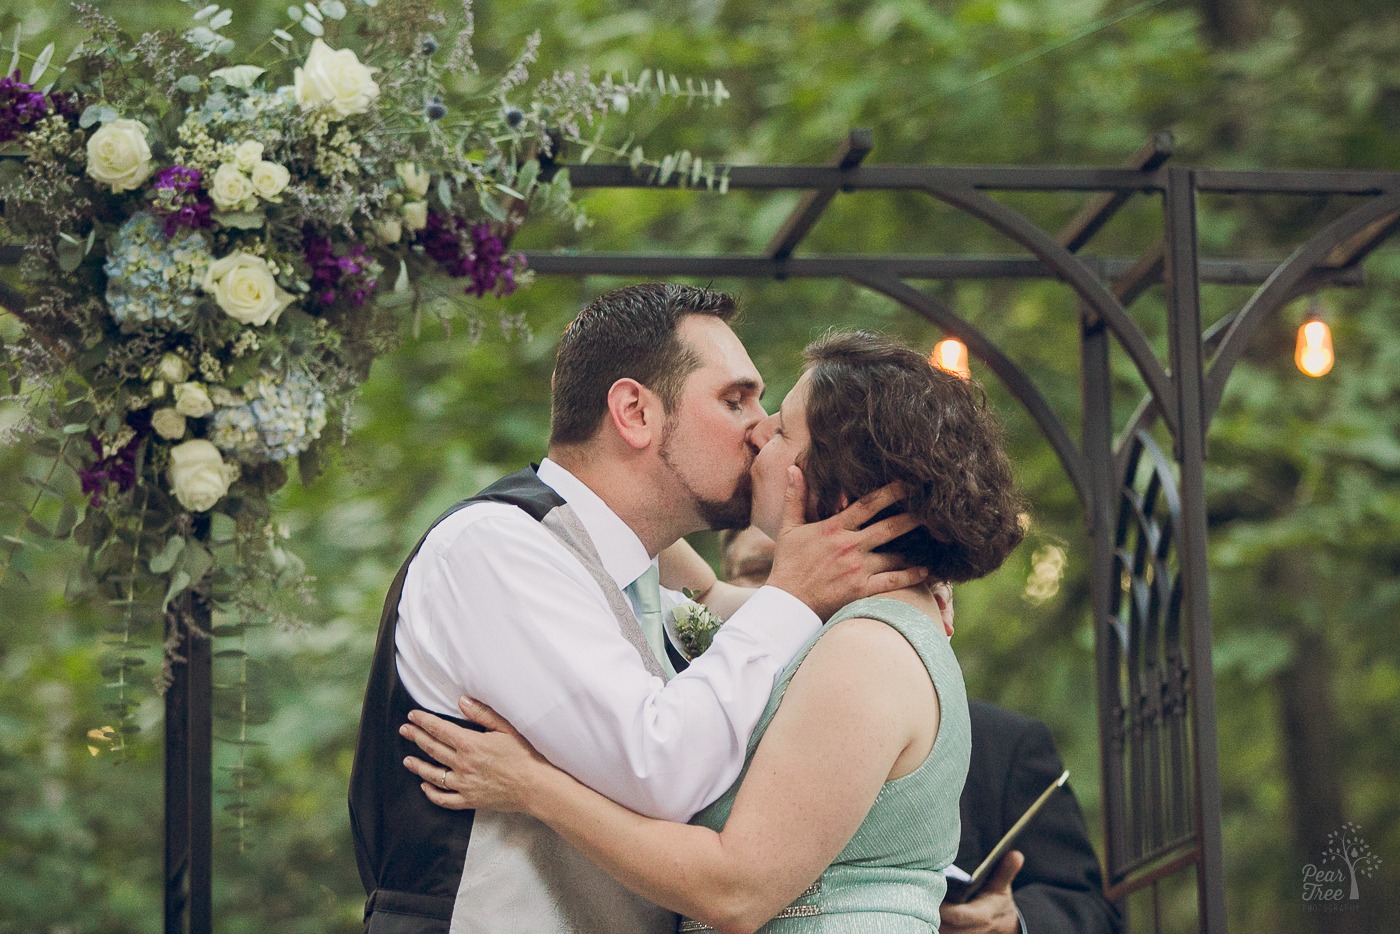 Groom kissing his bride in backyard wedding ceremony